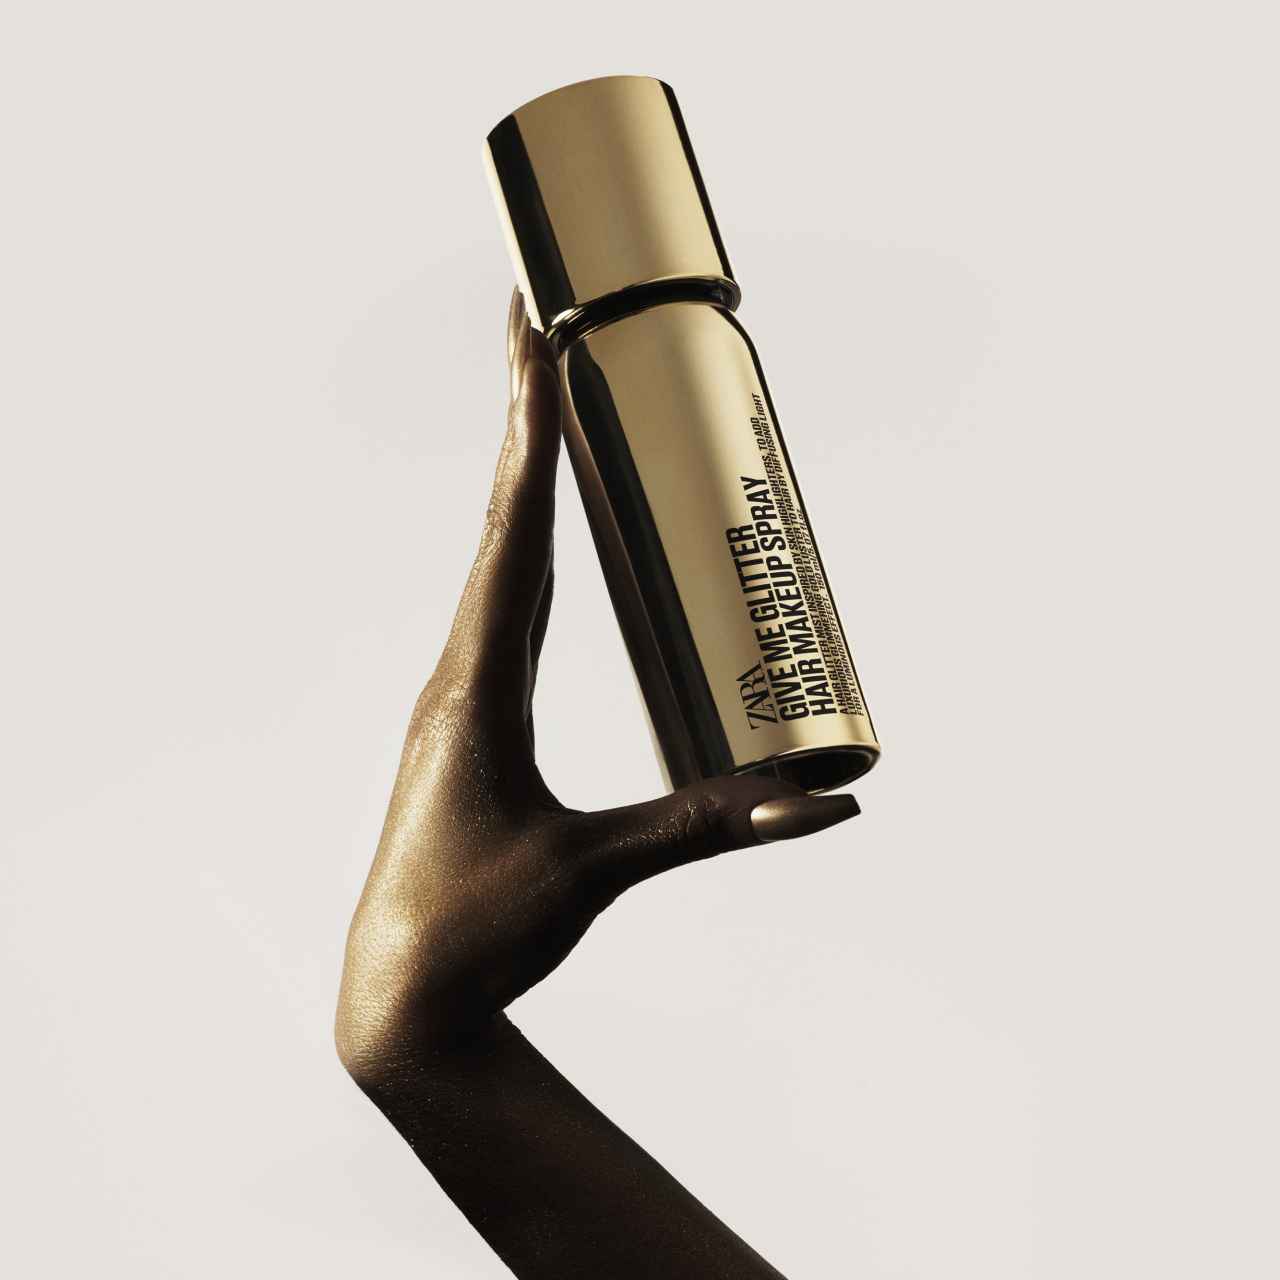 Detalle del Spray Gold Glitter, de Zara.